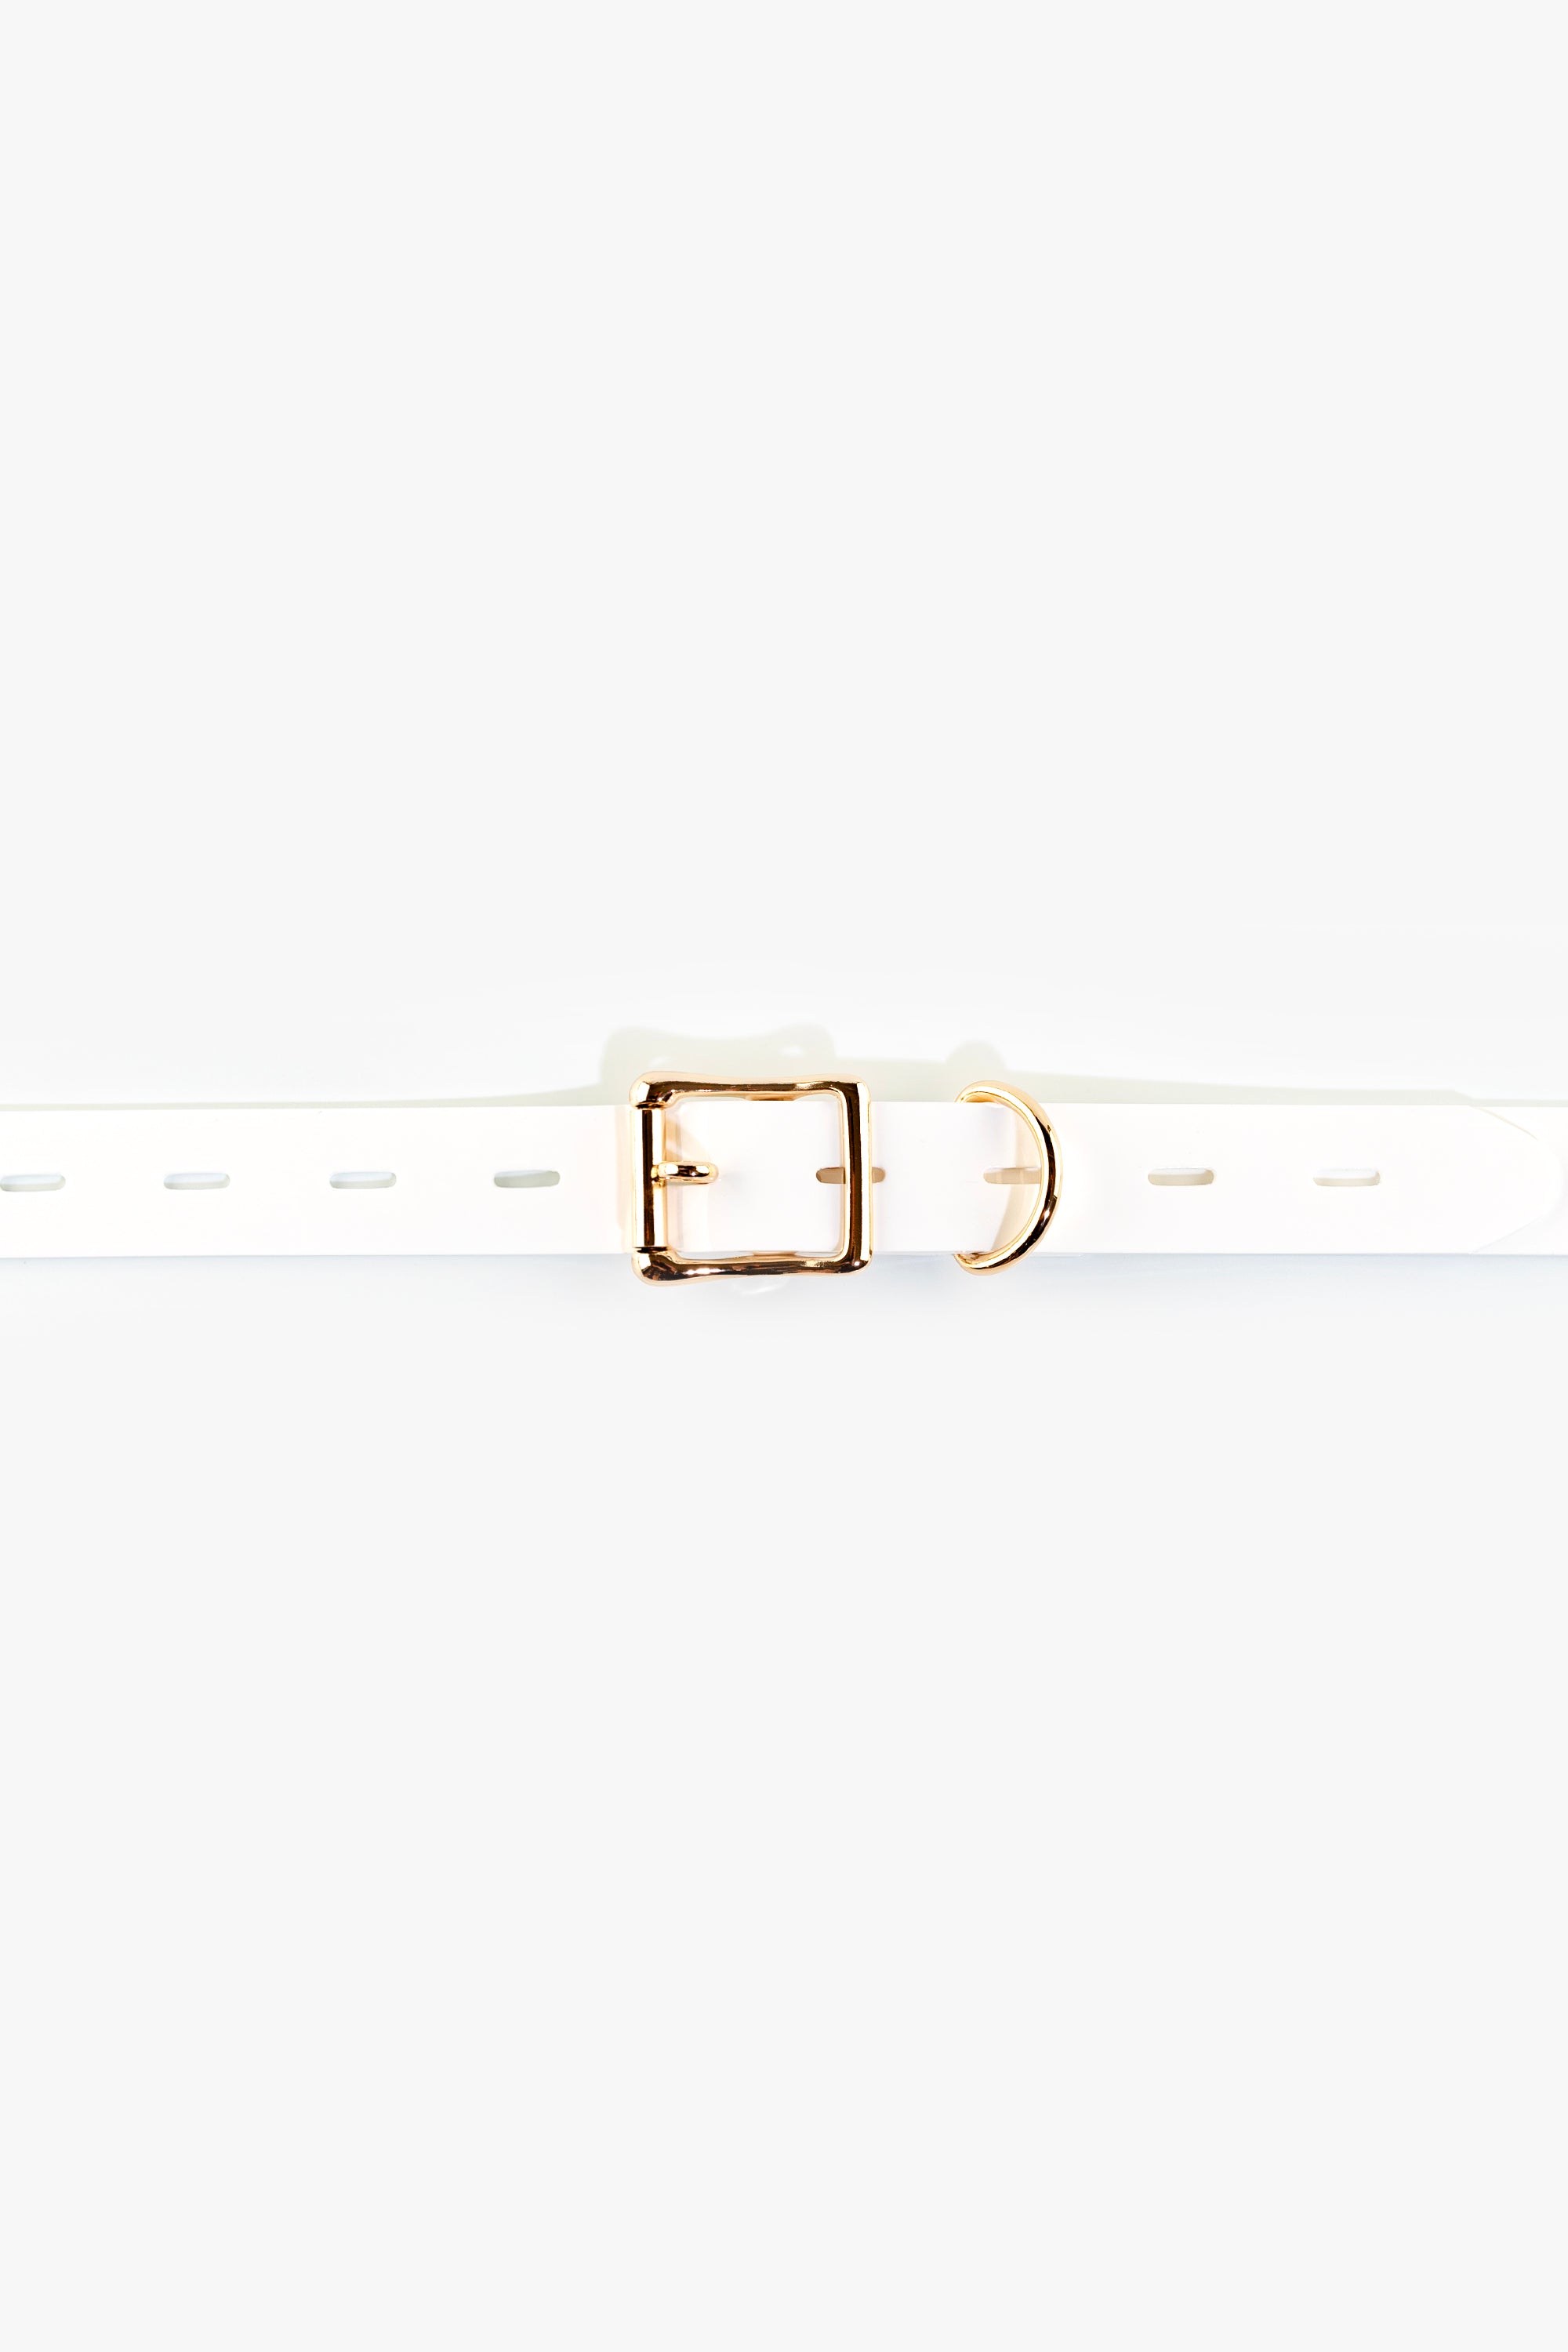 Bondage lockable straps set 25 mm, white/gold